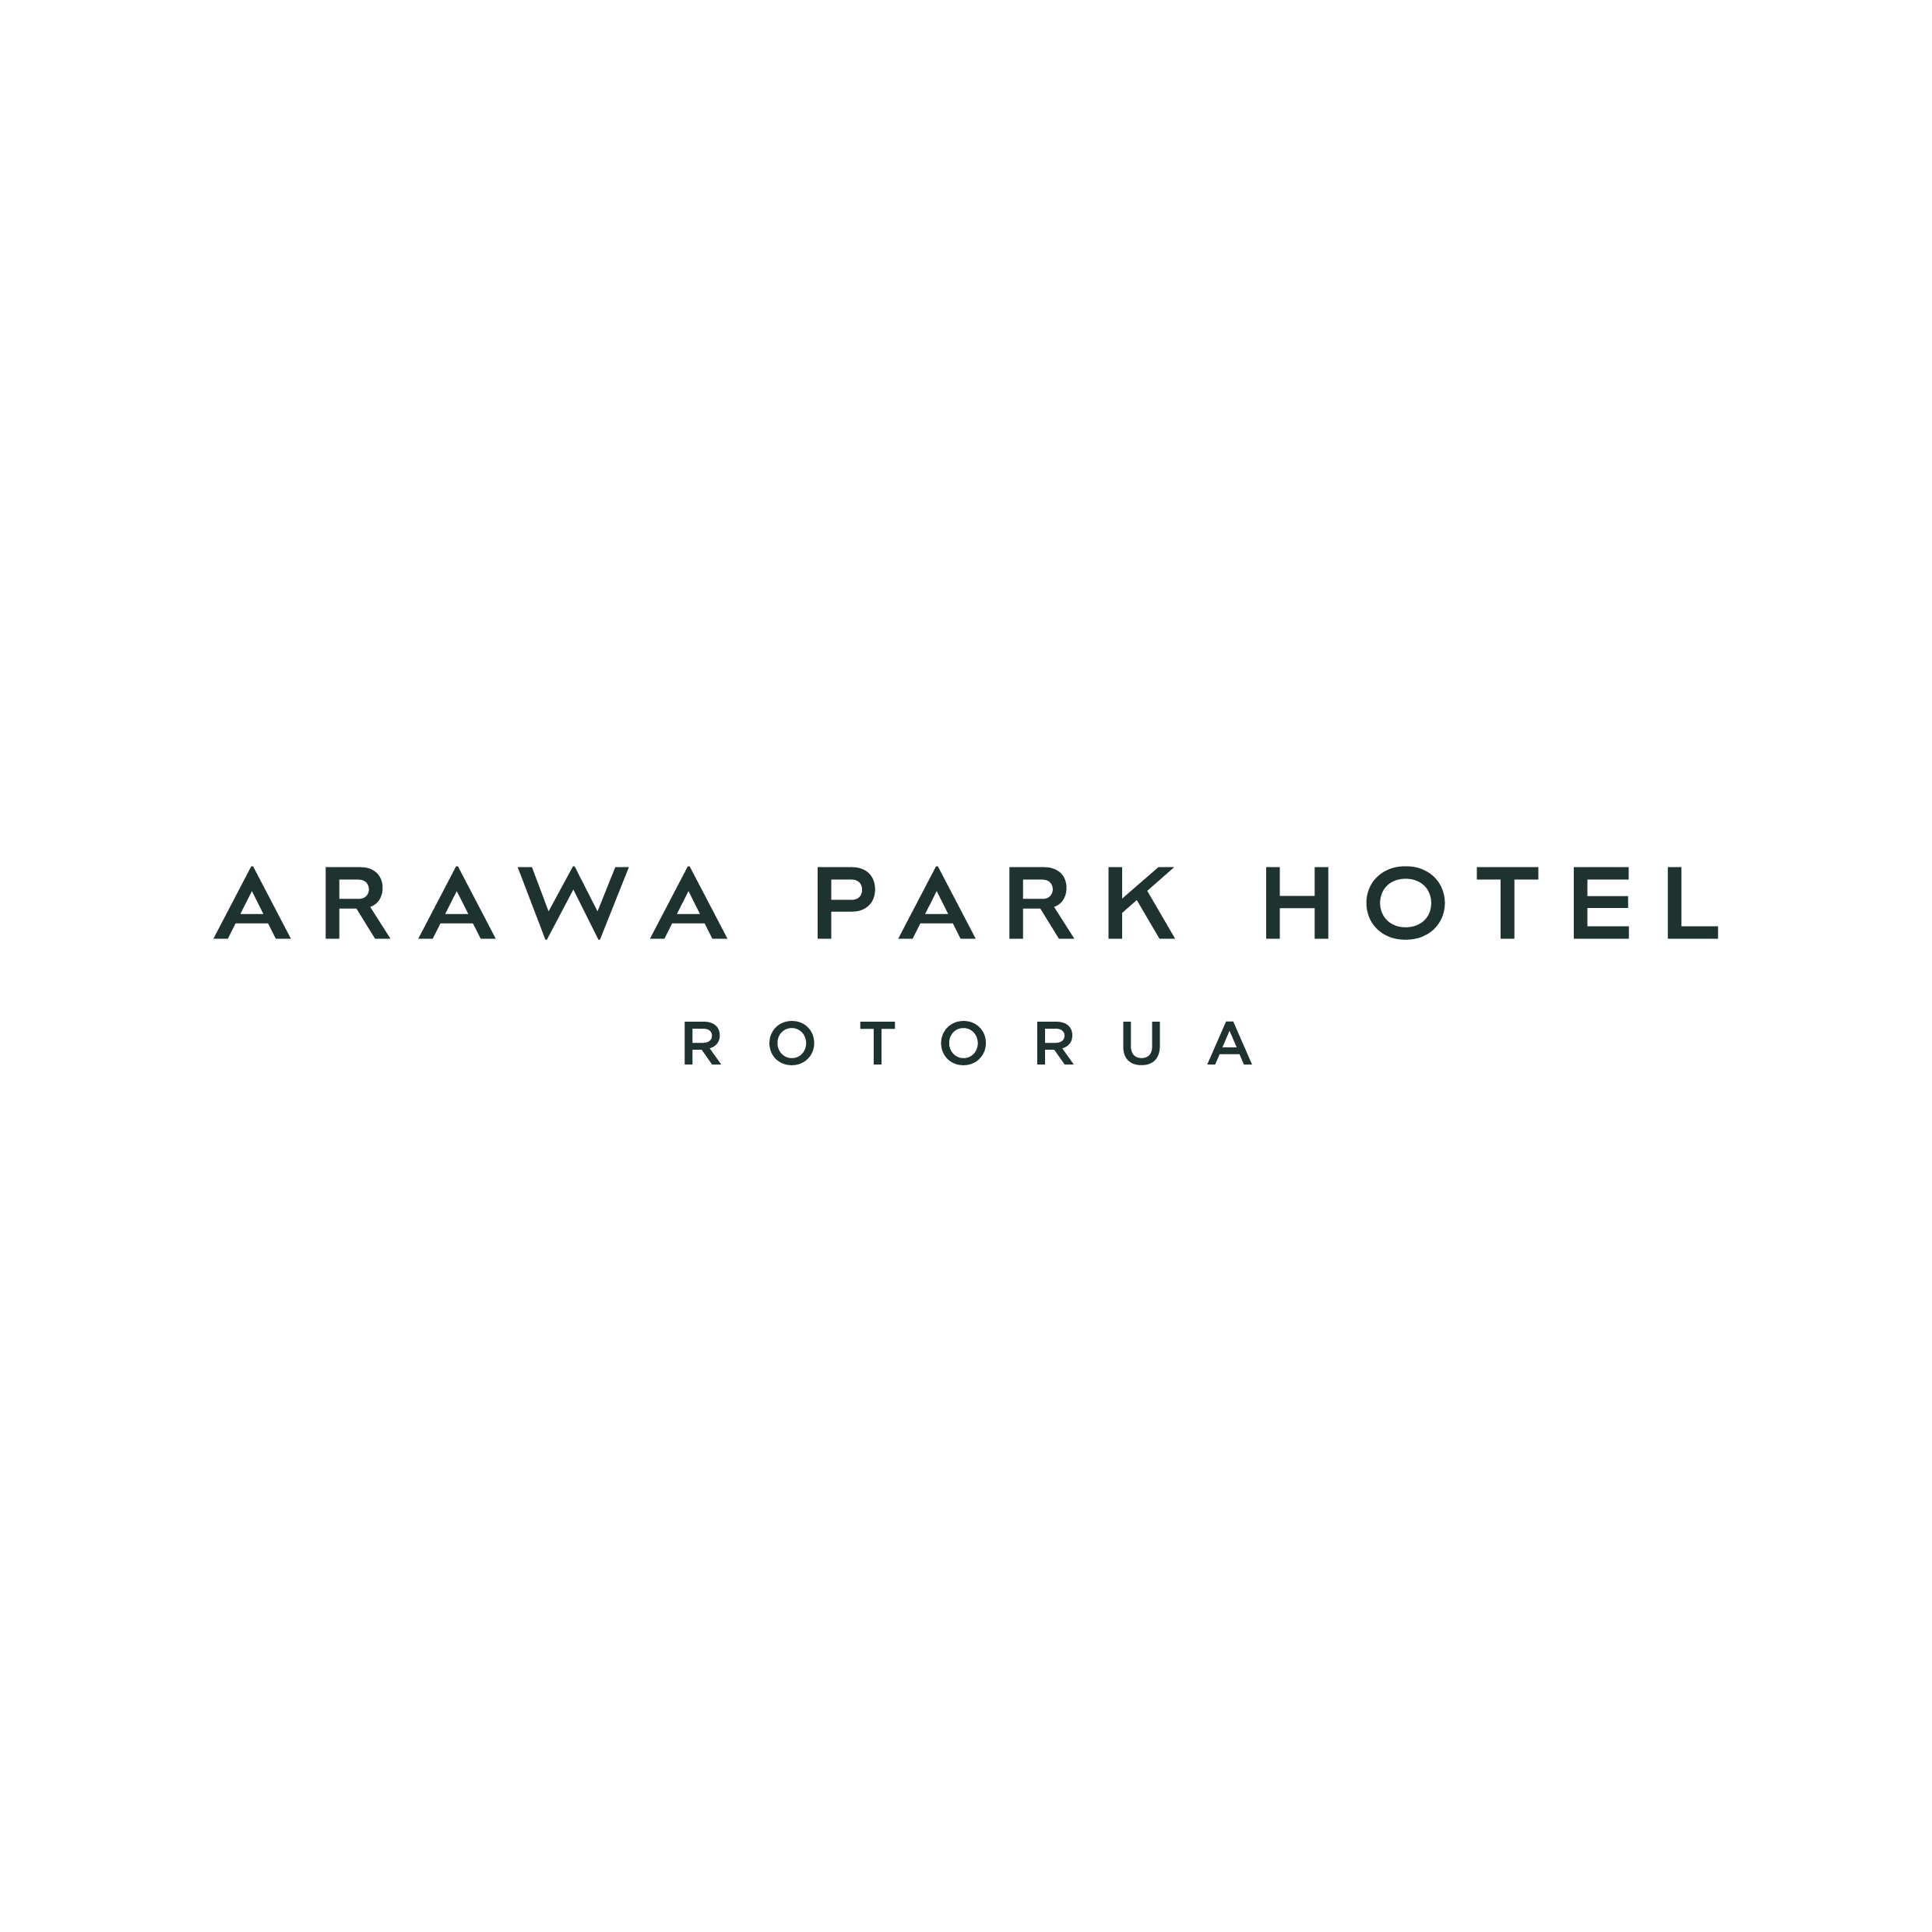 
Arawa Park Hotel Rotorua